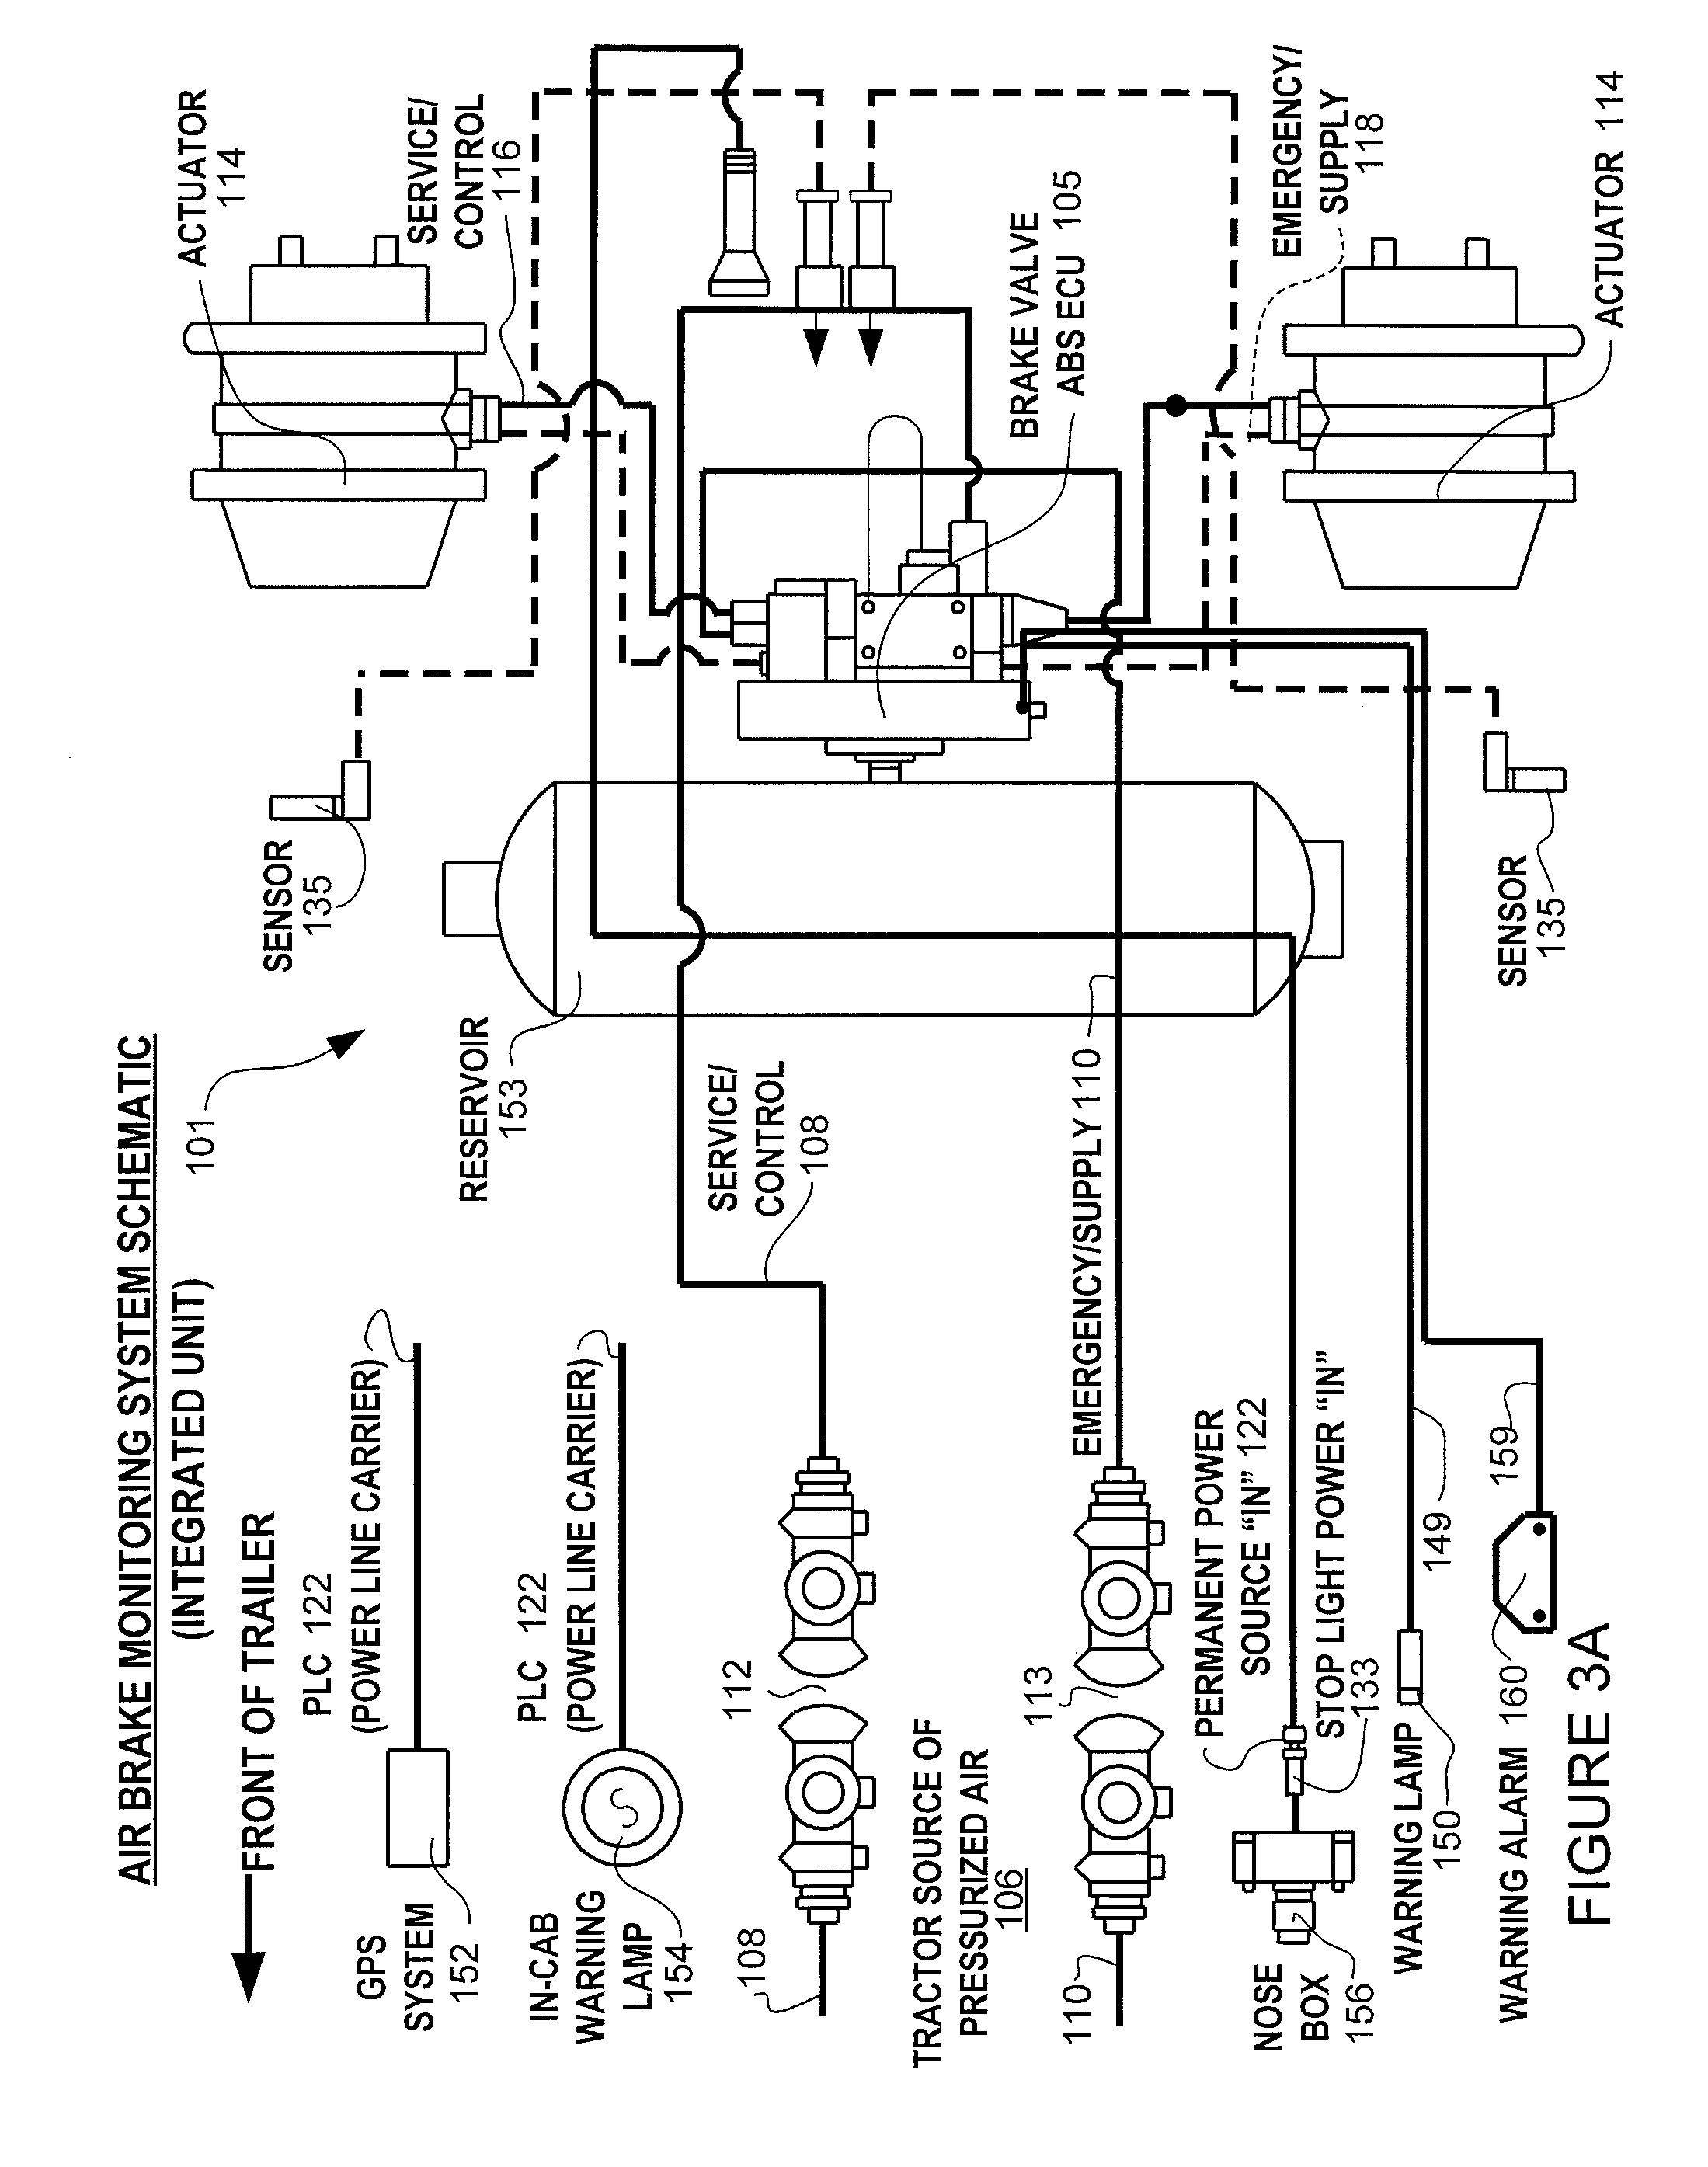 prostar wabco abs wiring schematics enthusiast wiring diagrams u2022 rh rasalibre co Basic Wiring Diagram Basic